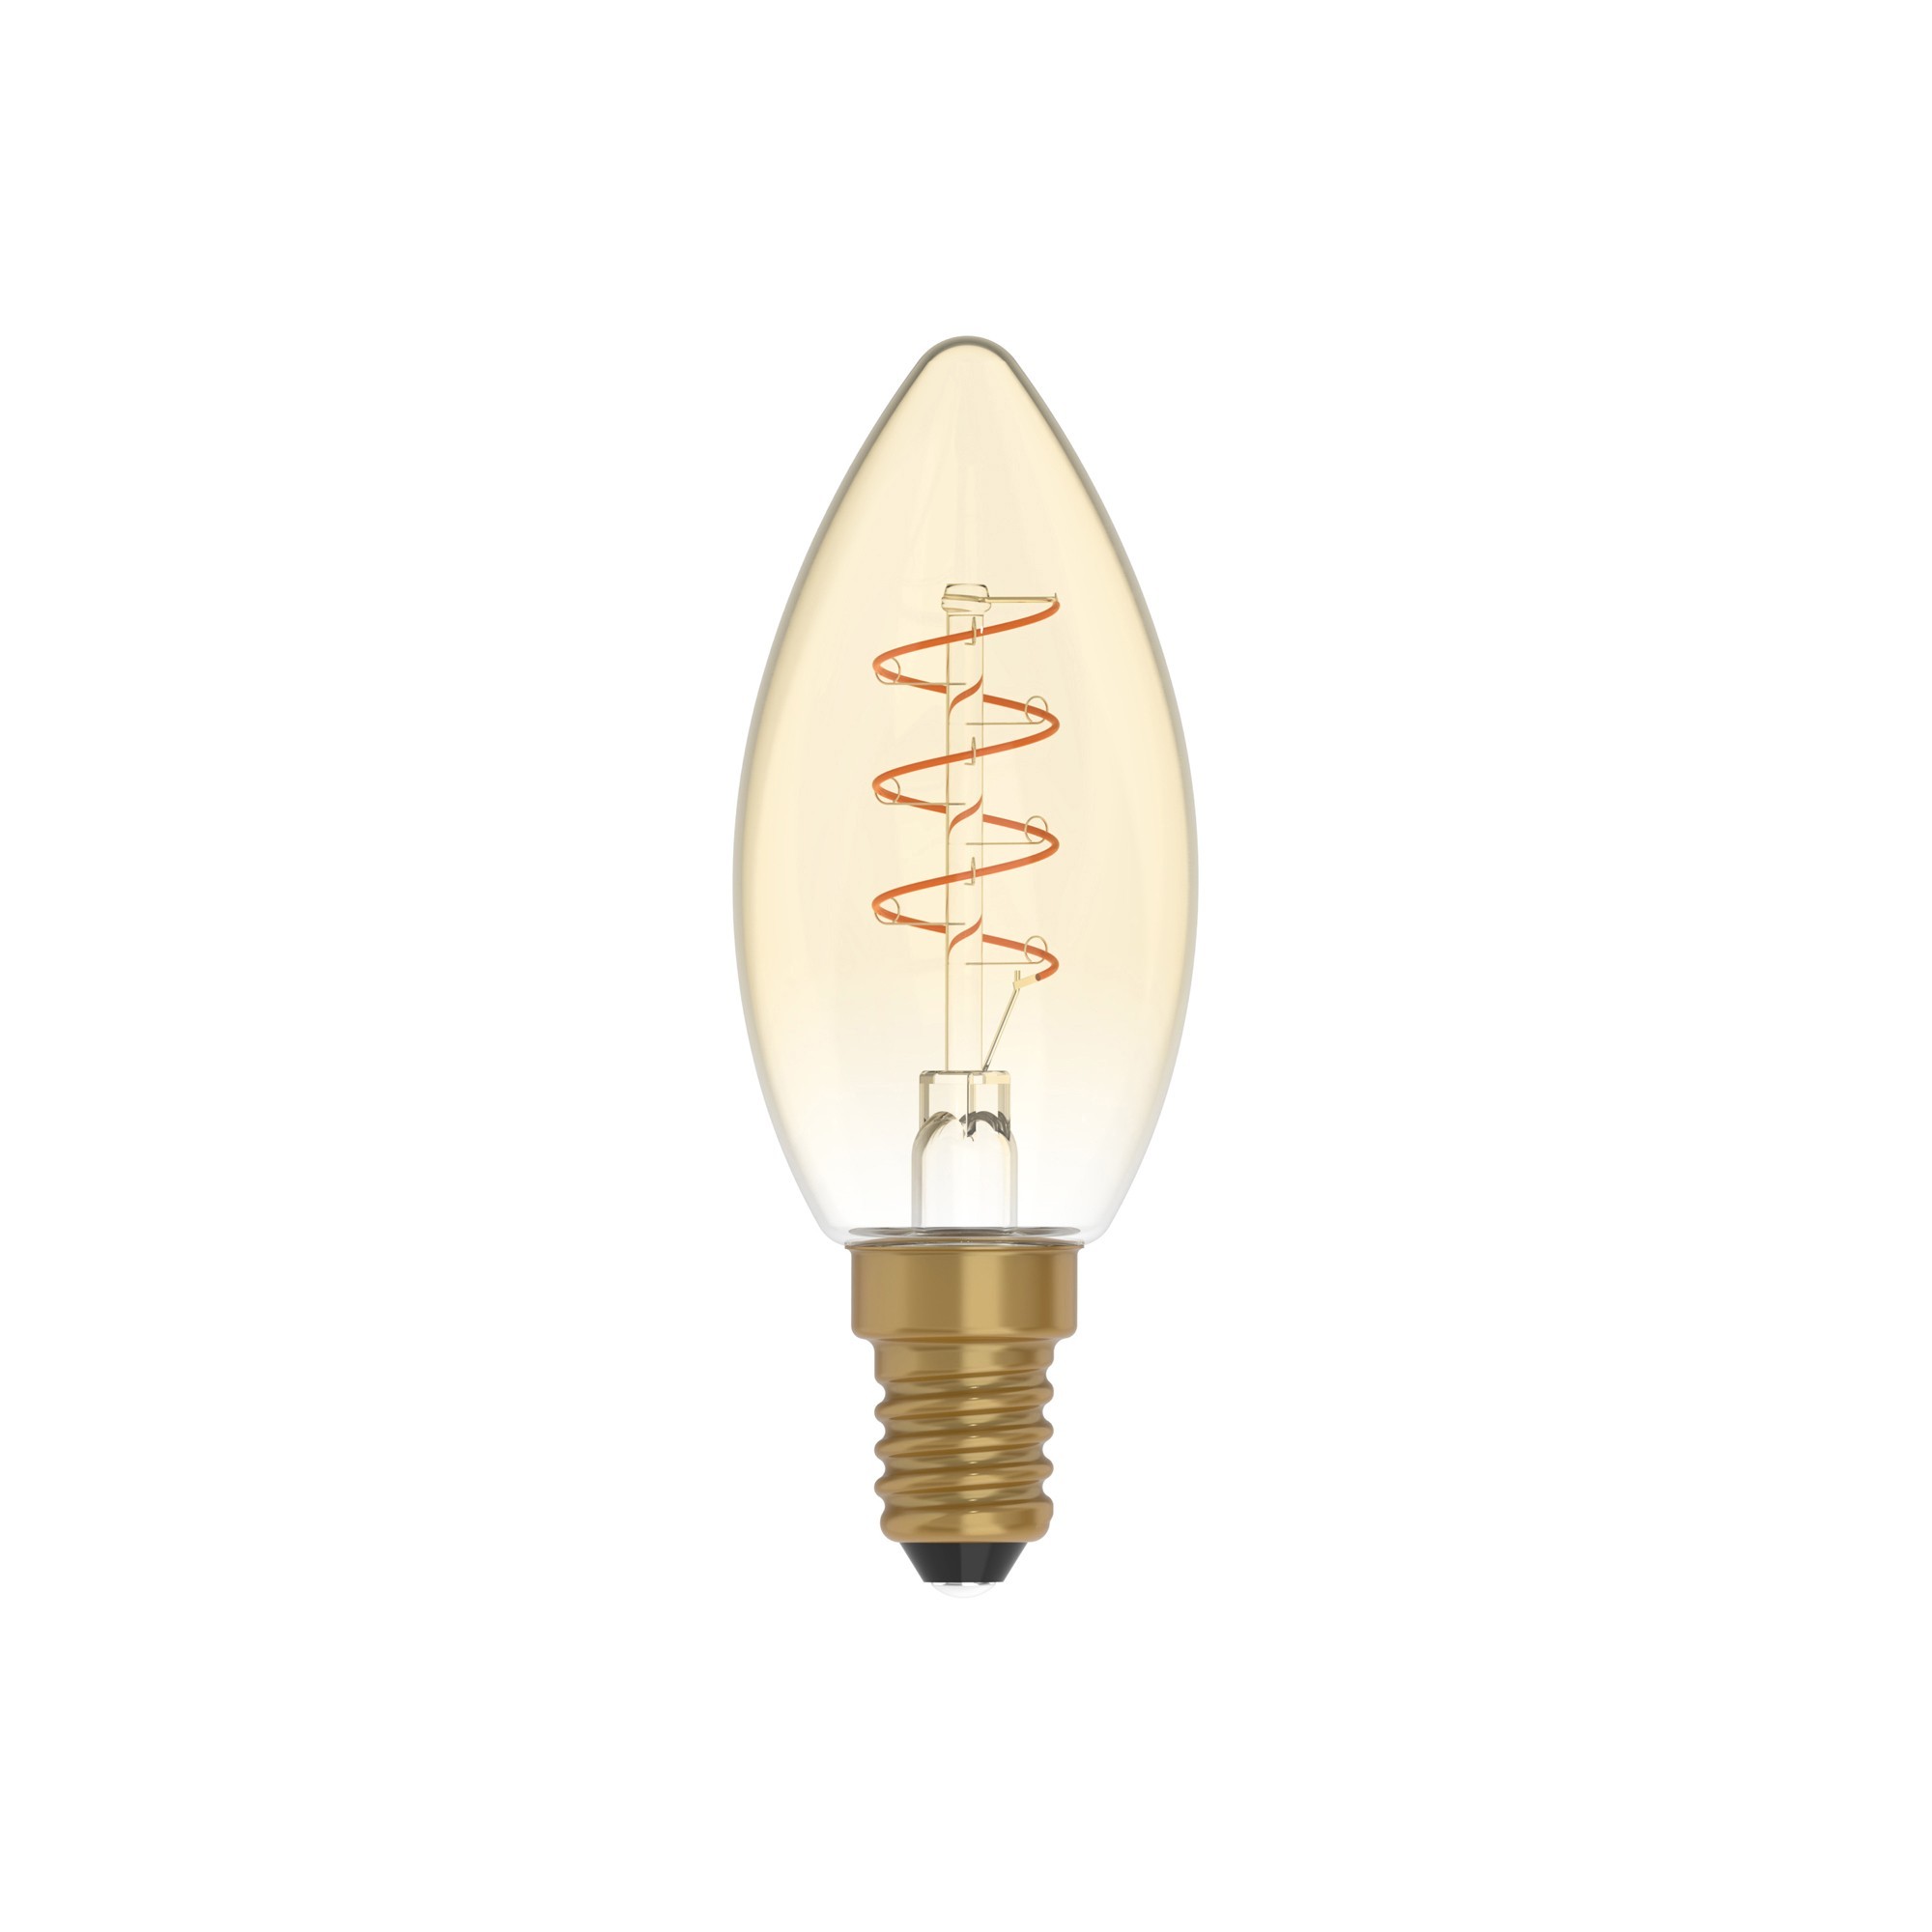 C01 - LED Light Bulb C35, E14, 2,5W, 1800K, 136Lm, with extra slim spiral filament, golden glass